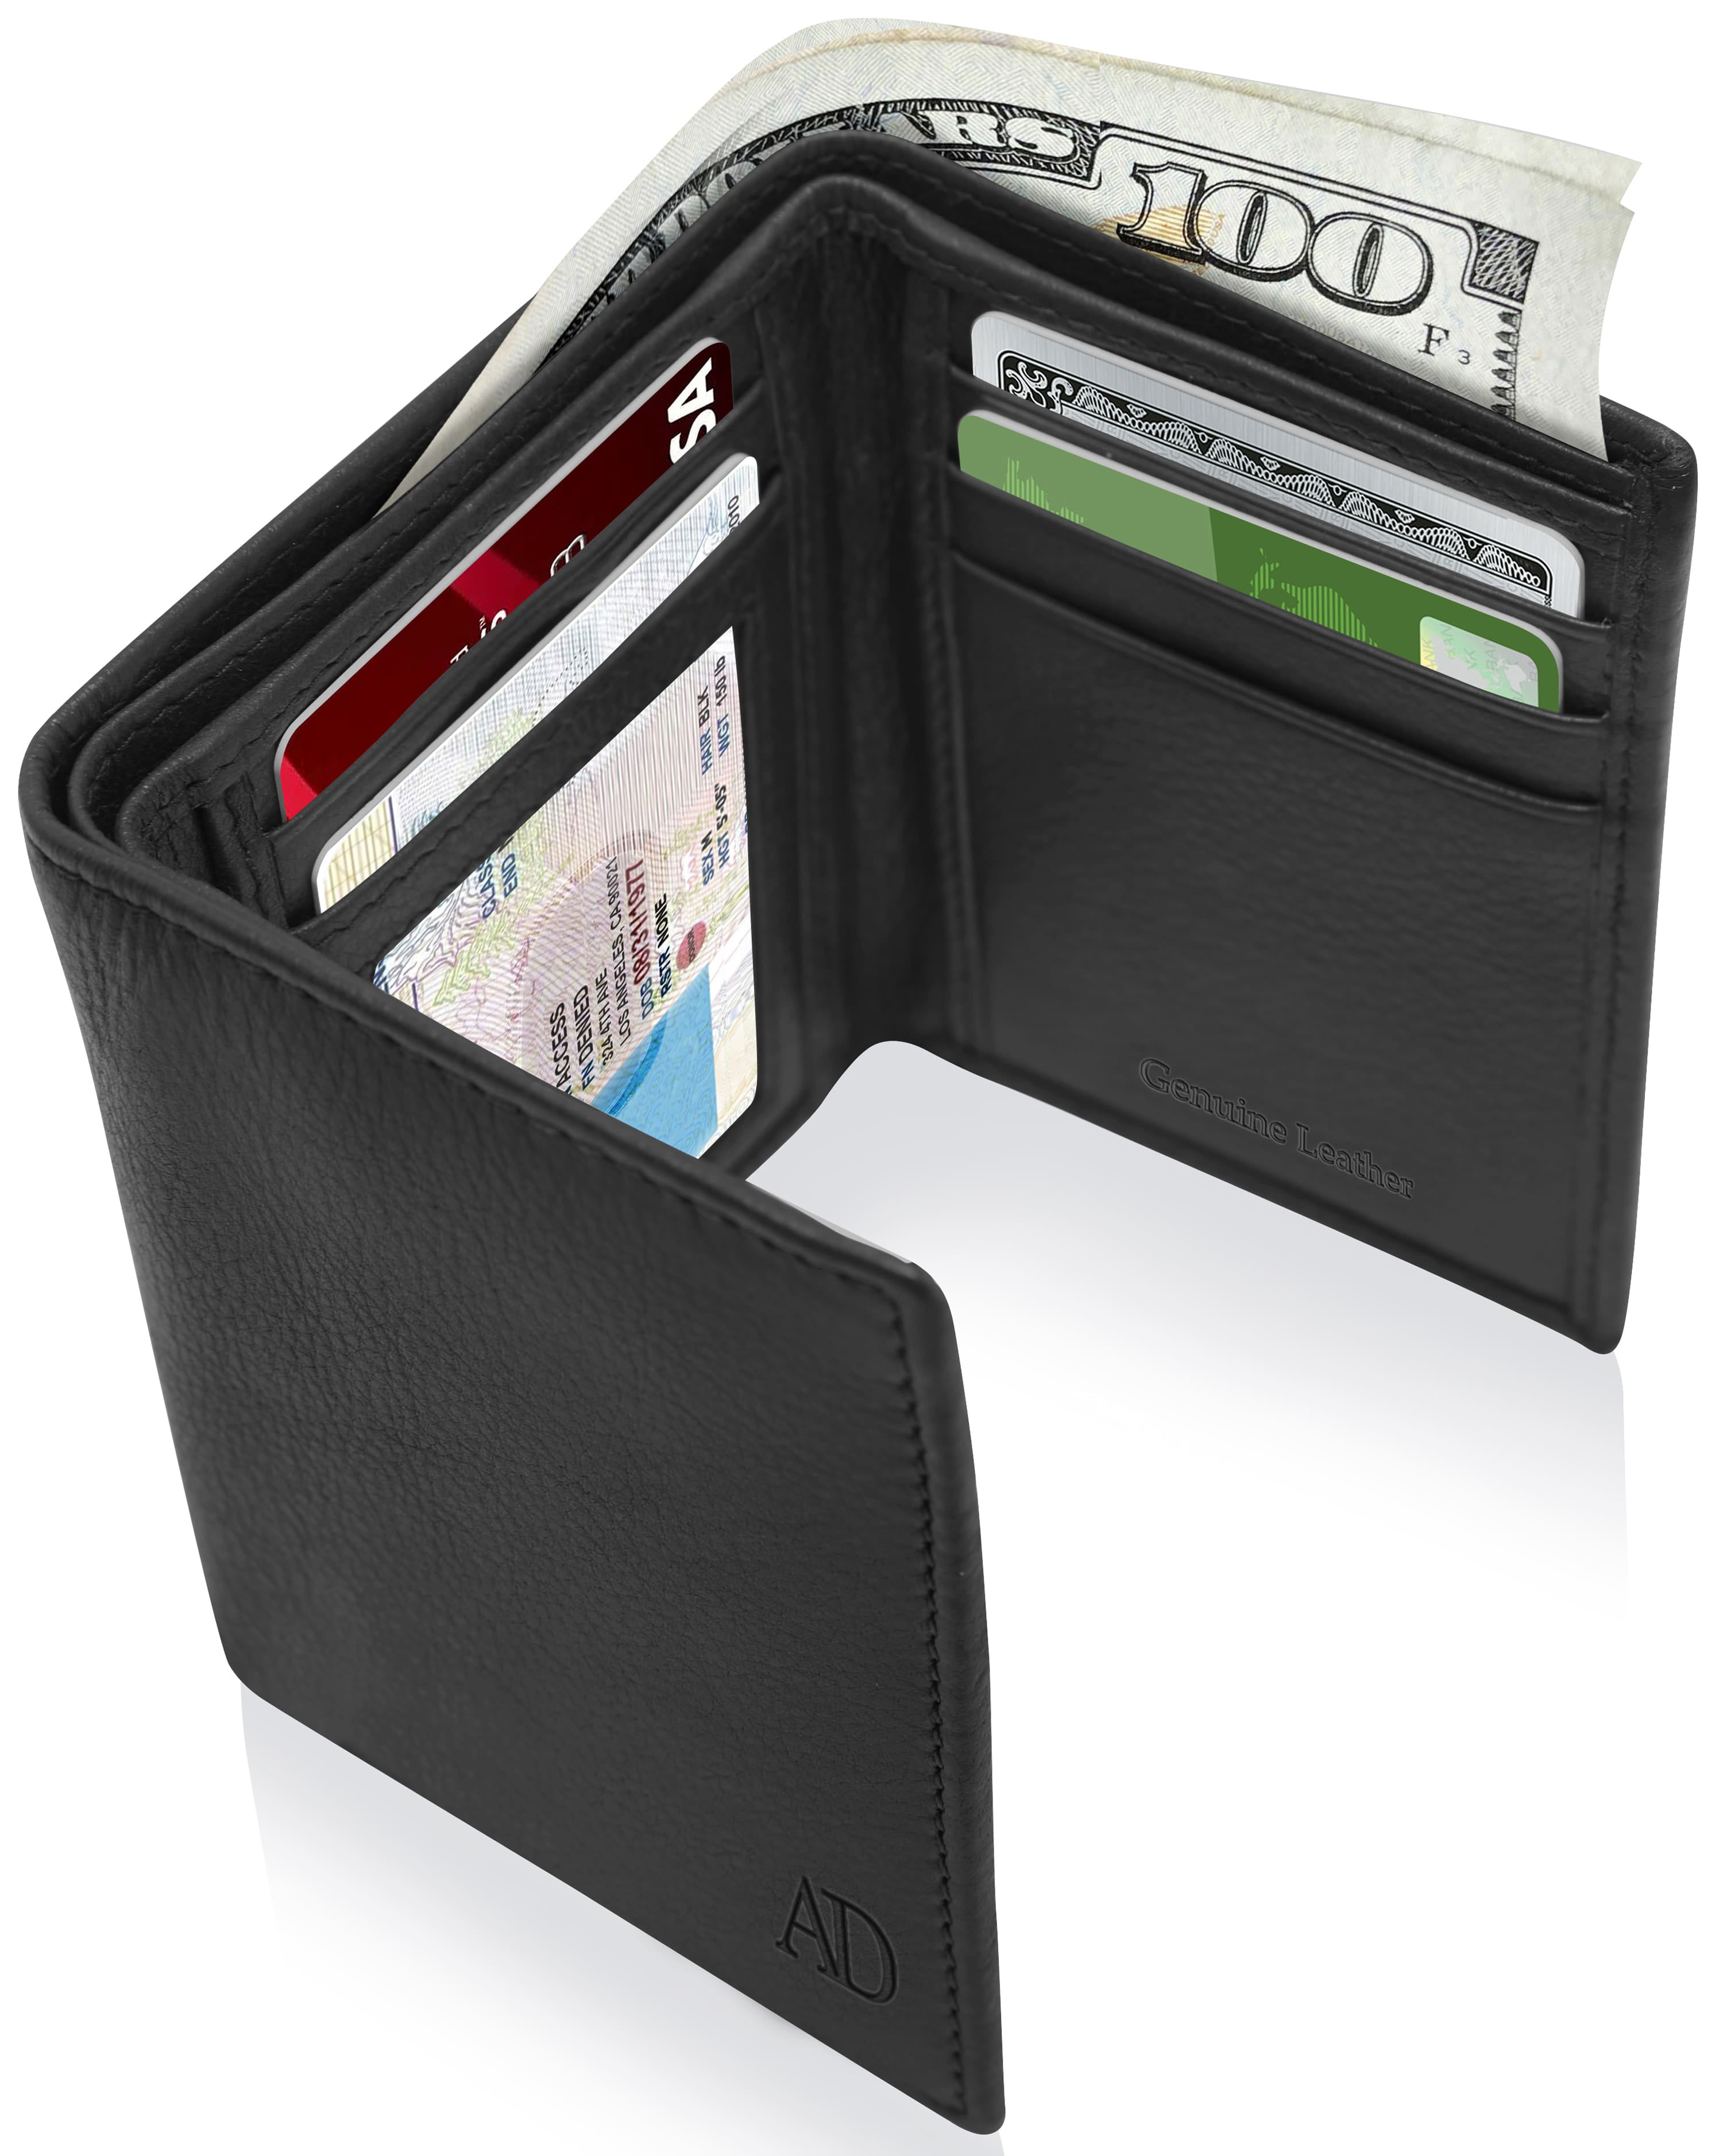 Genuine Slim Leather Trifold Mens WalletFront Pocket with RFID BlockingID